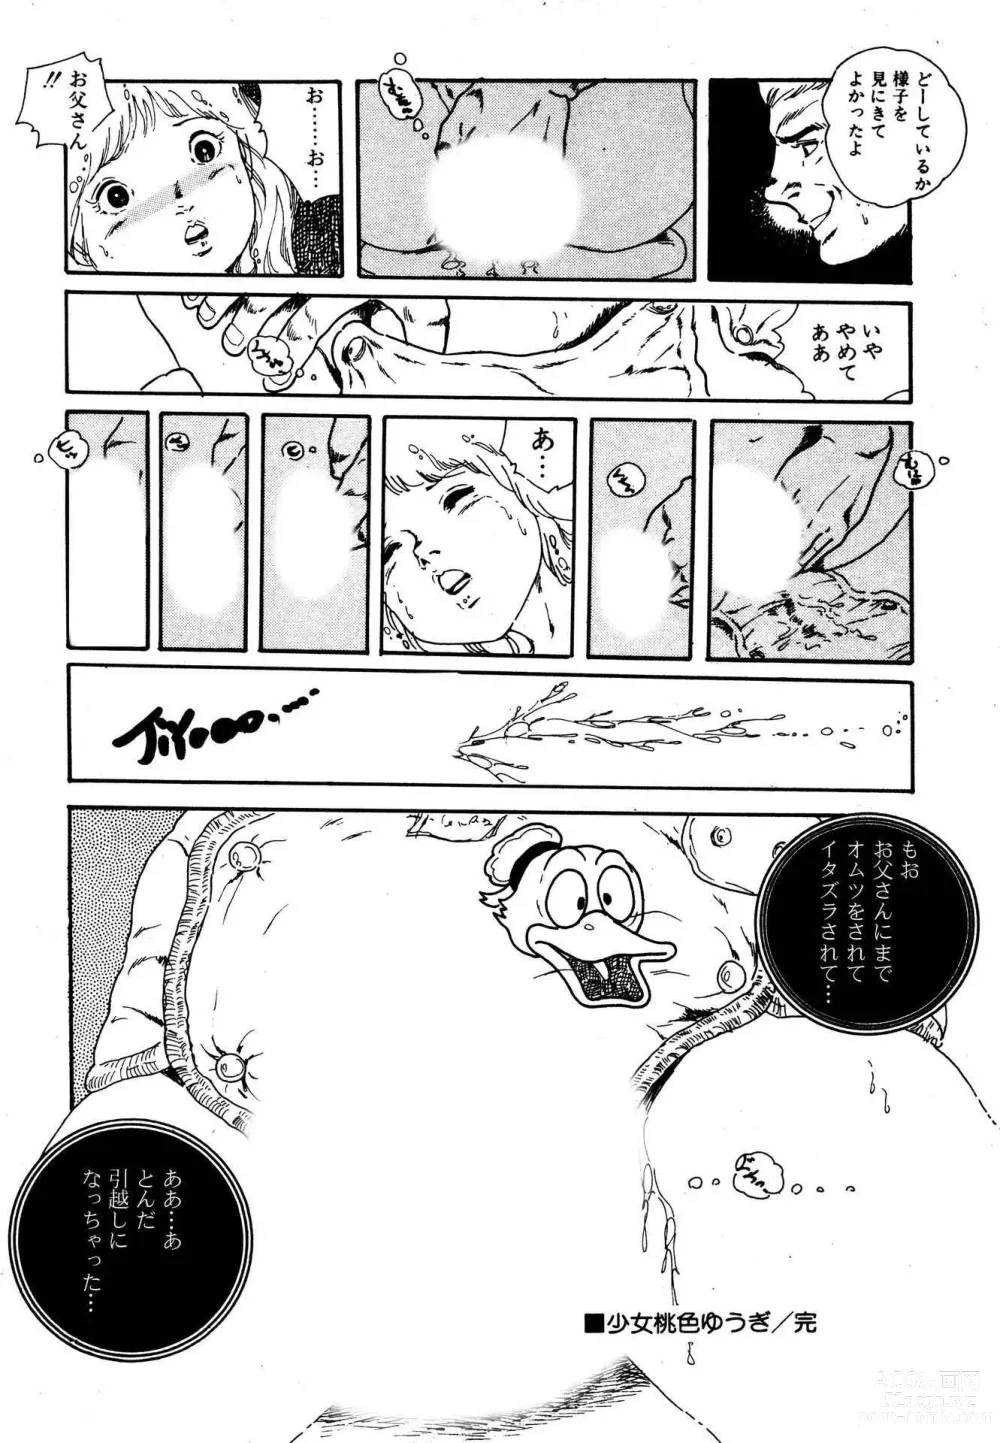 Page 20 of manga Dreaming fairy